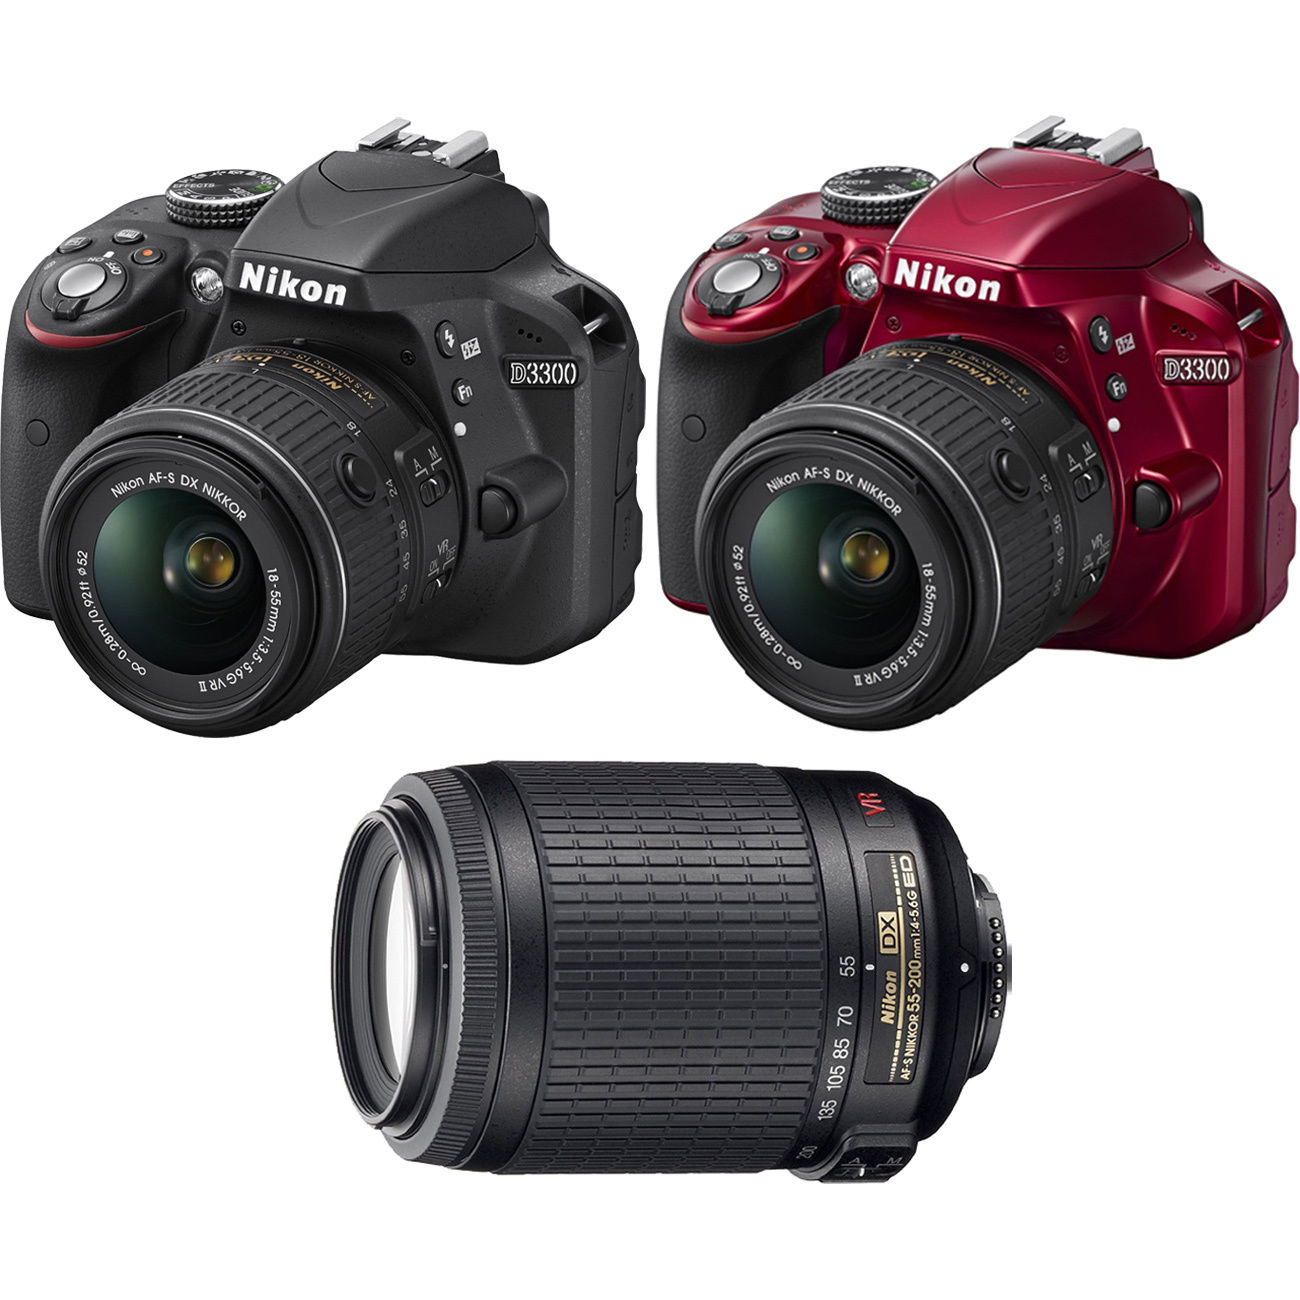 Hot Deal – Refurbished Nikon D3300 w/ 18-55 & 55-200 Lenses for $349 at Beach Camera !